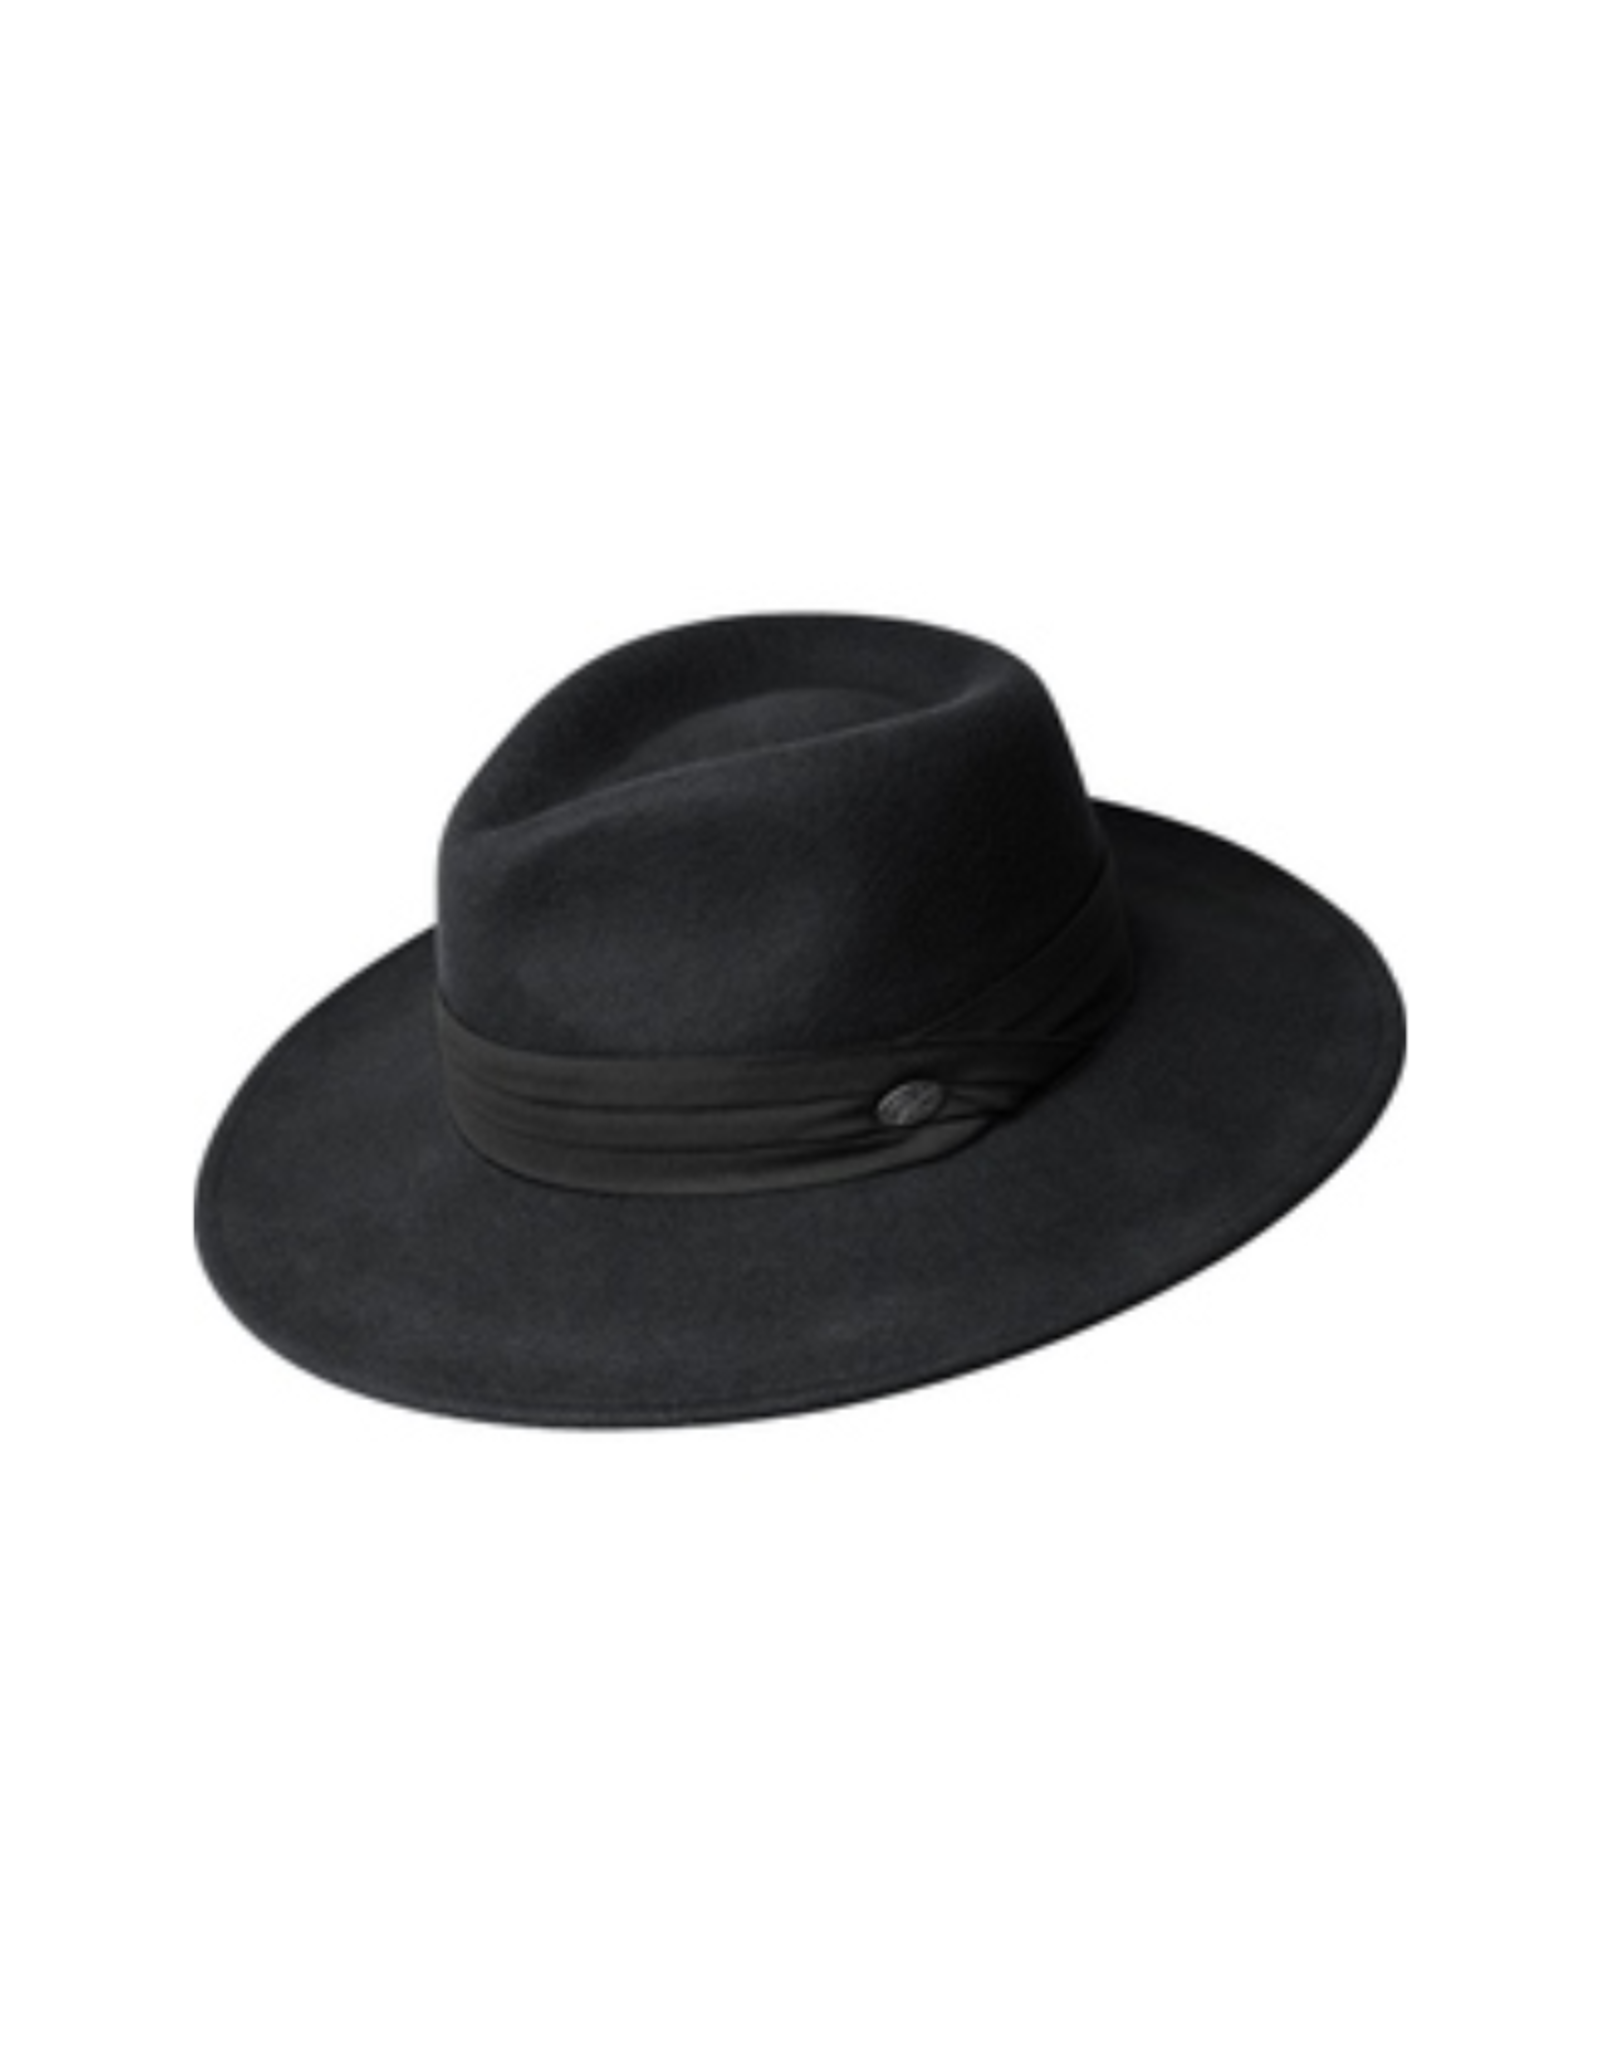 Bailey Hat Co. HAT-FEDORA "THALER